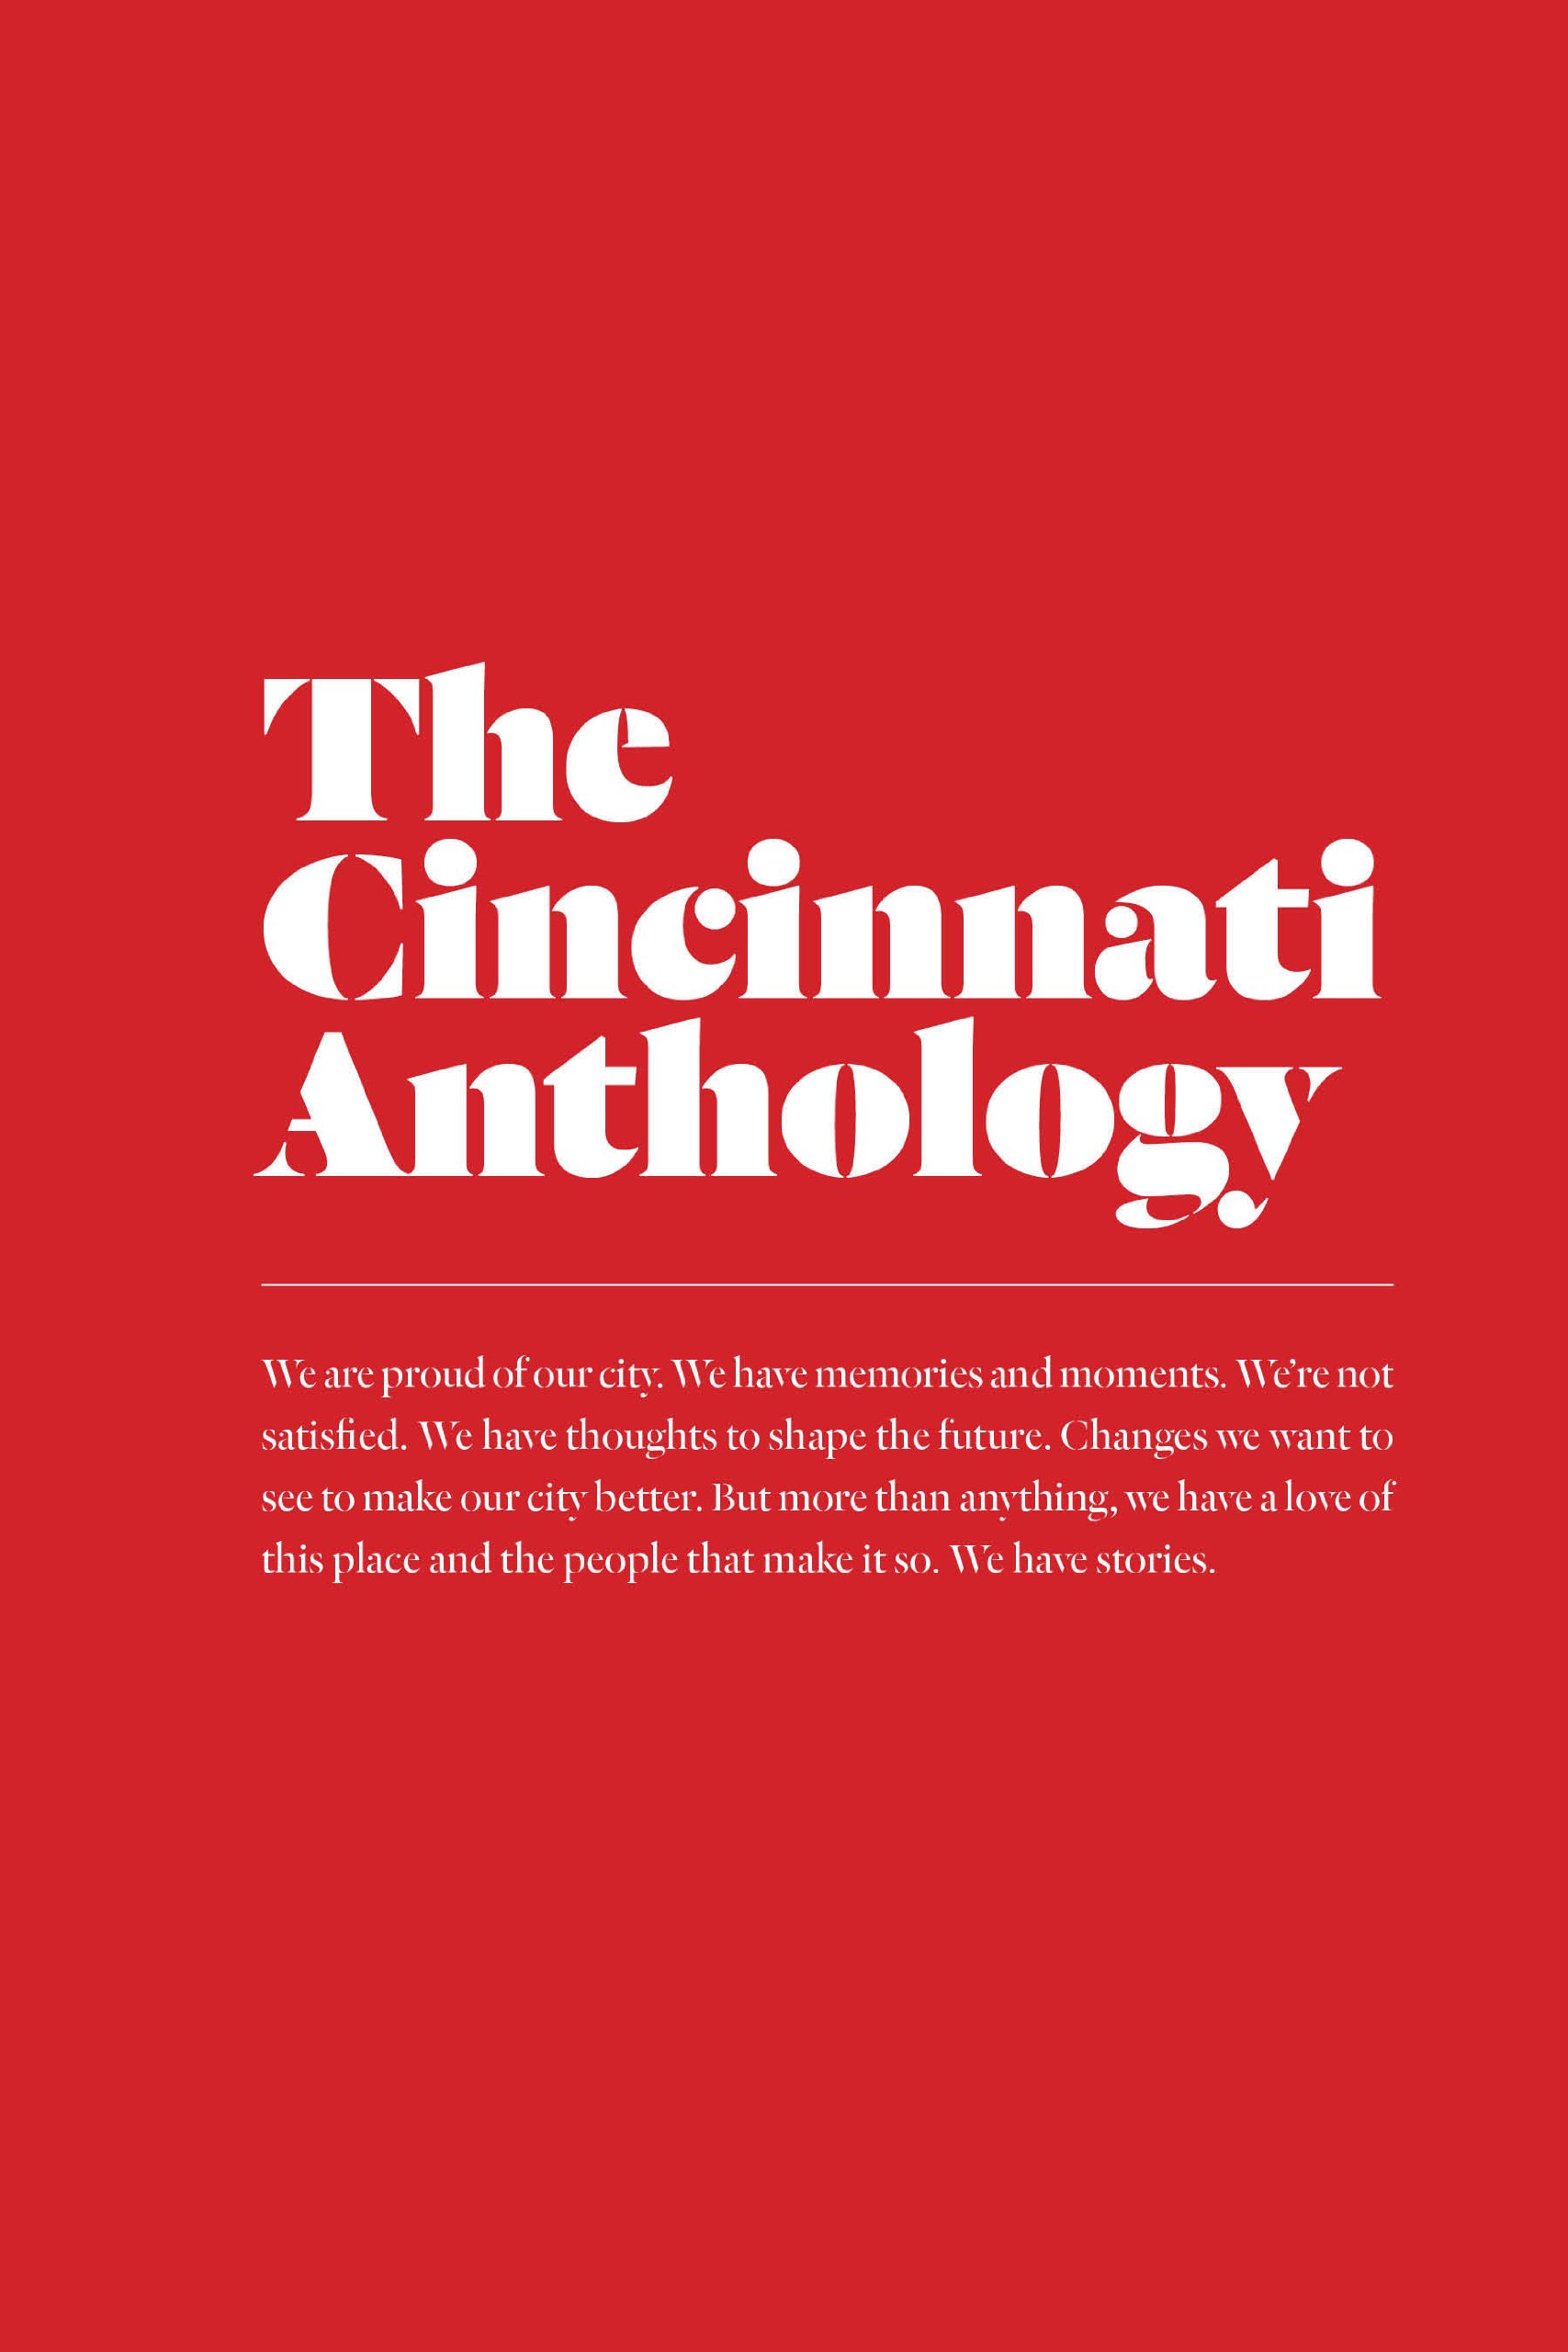 Cincinnati Anthology.jpg